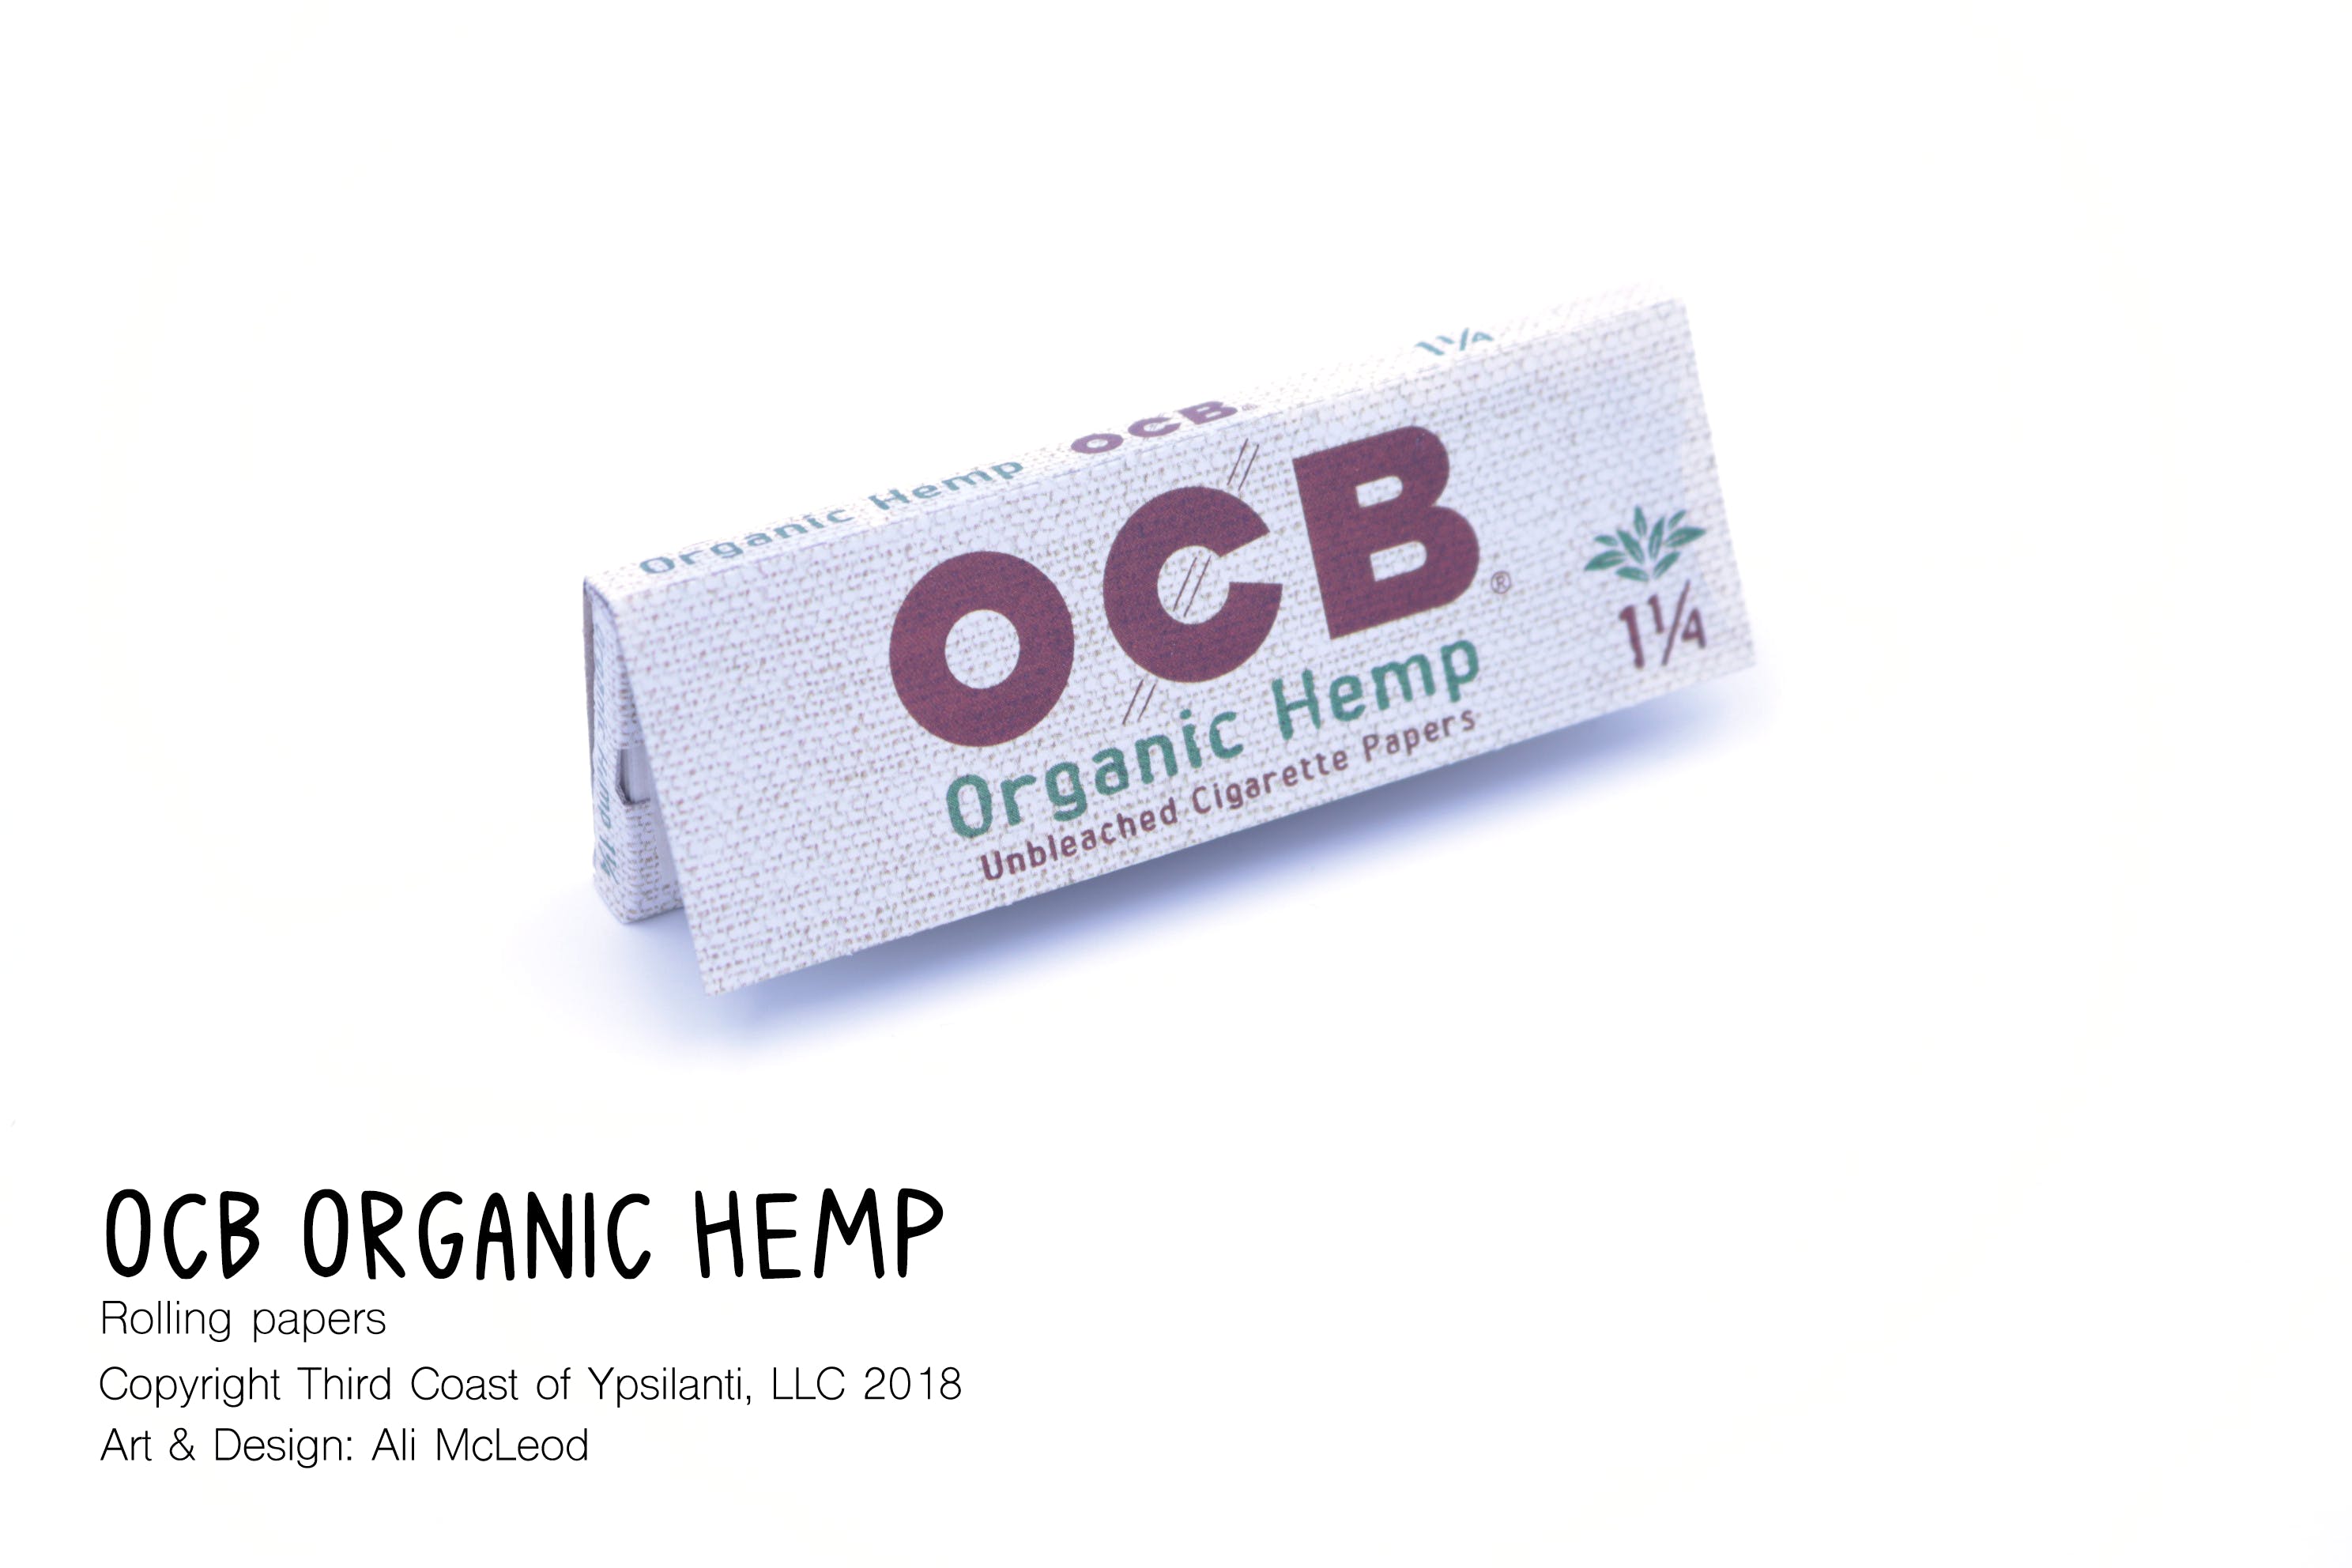 gear-ocb-organic-papers-1-14-inch